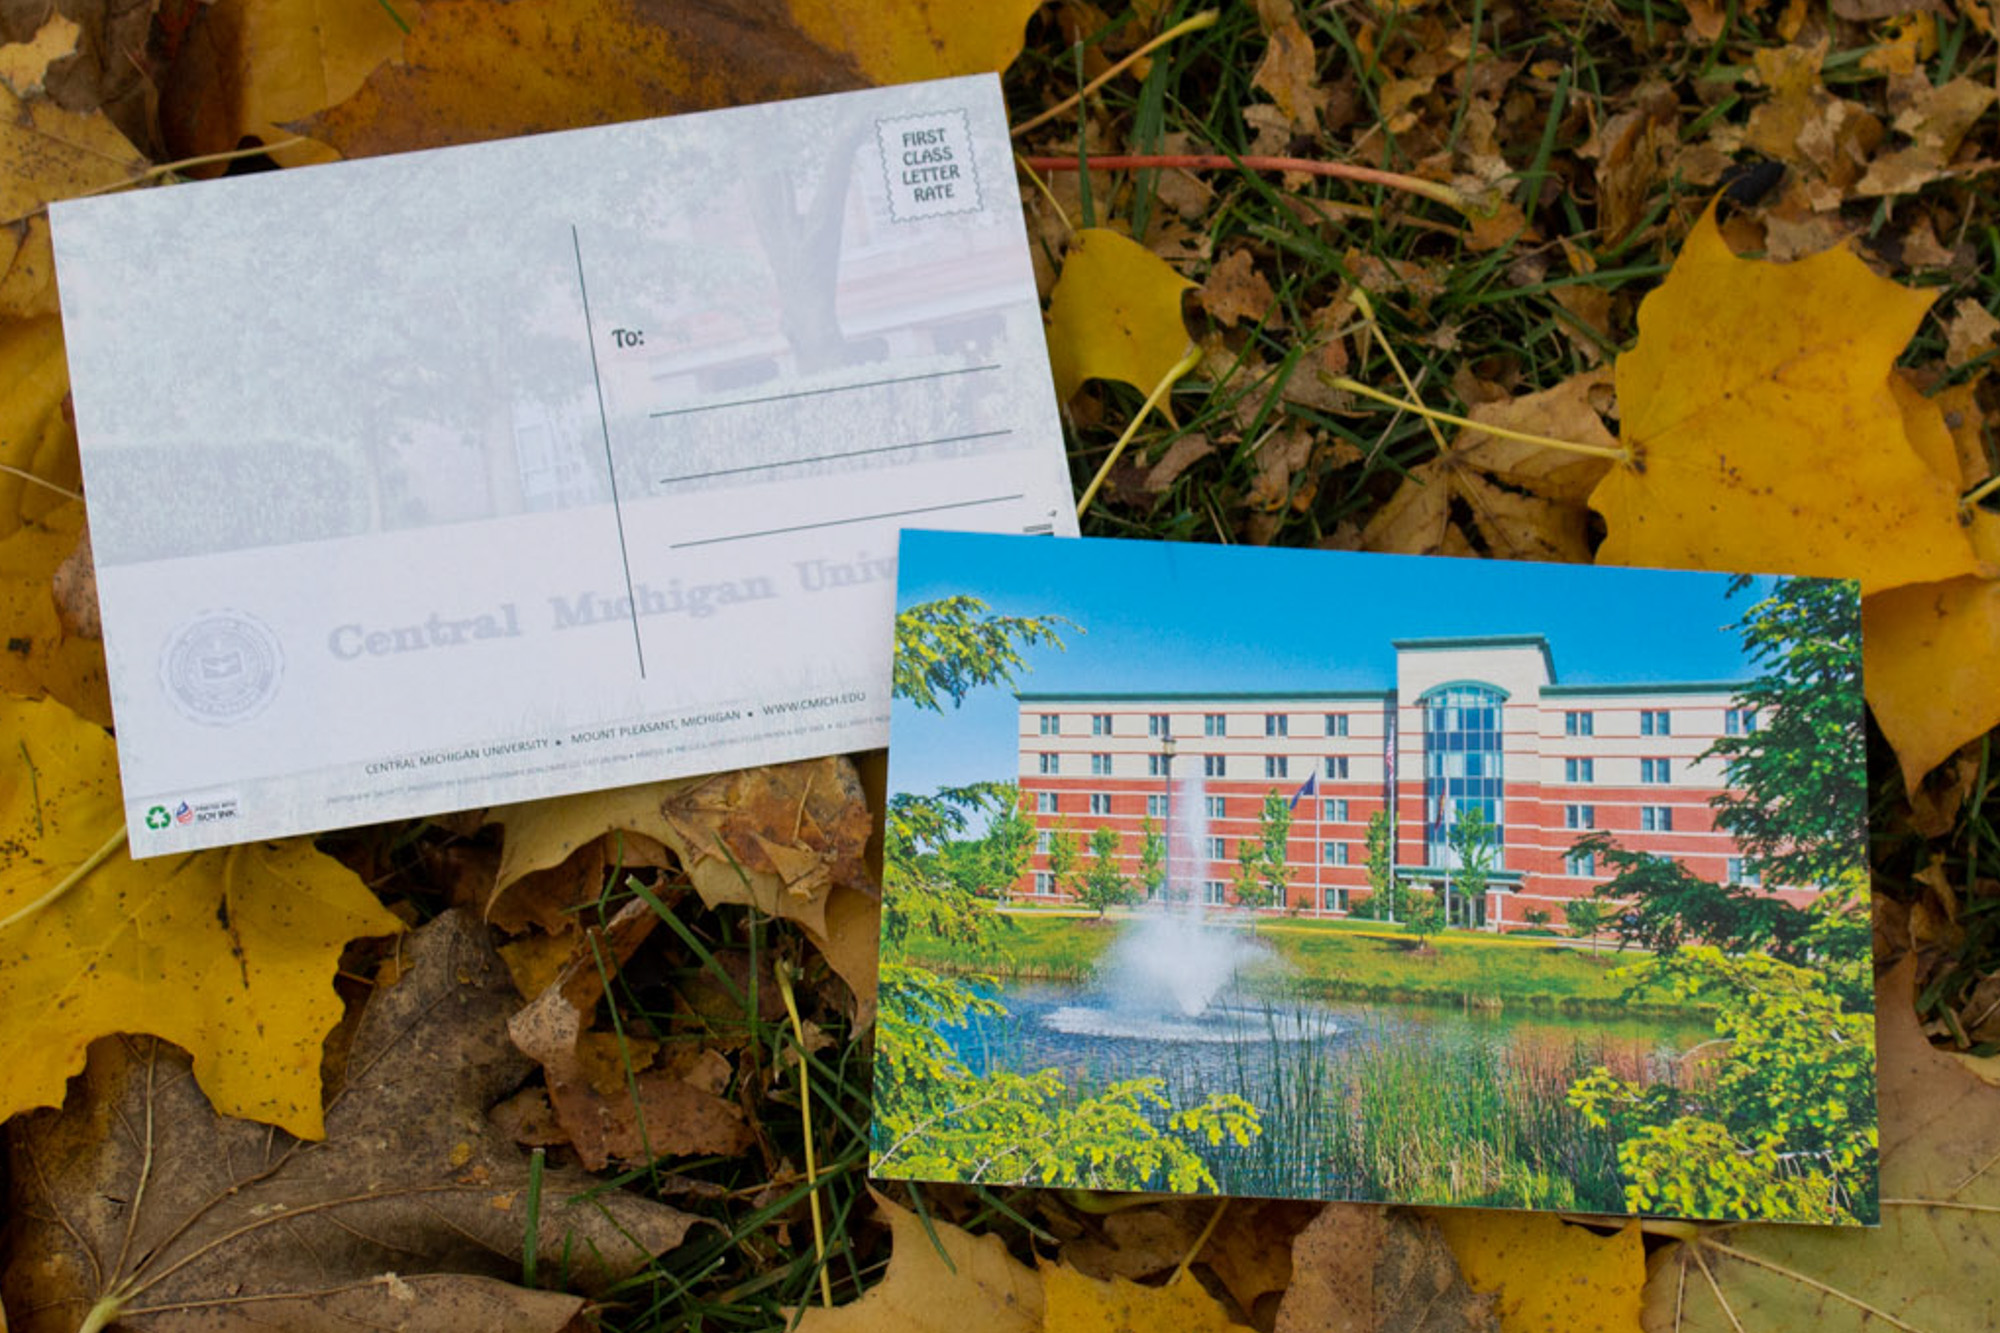 Central Michigan University Residence Hall Postcard (SKU 1212219698)